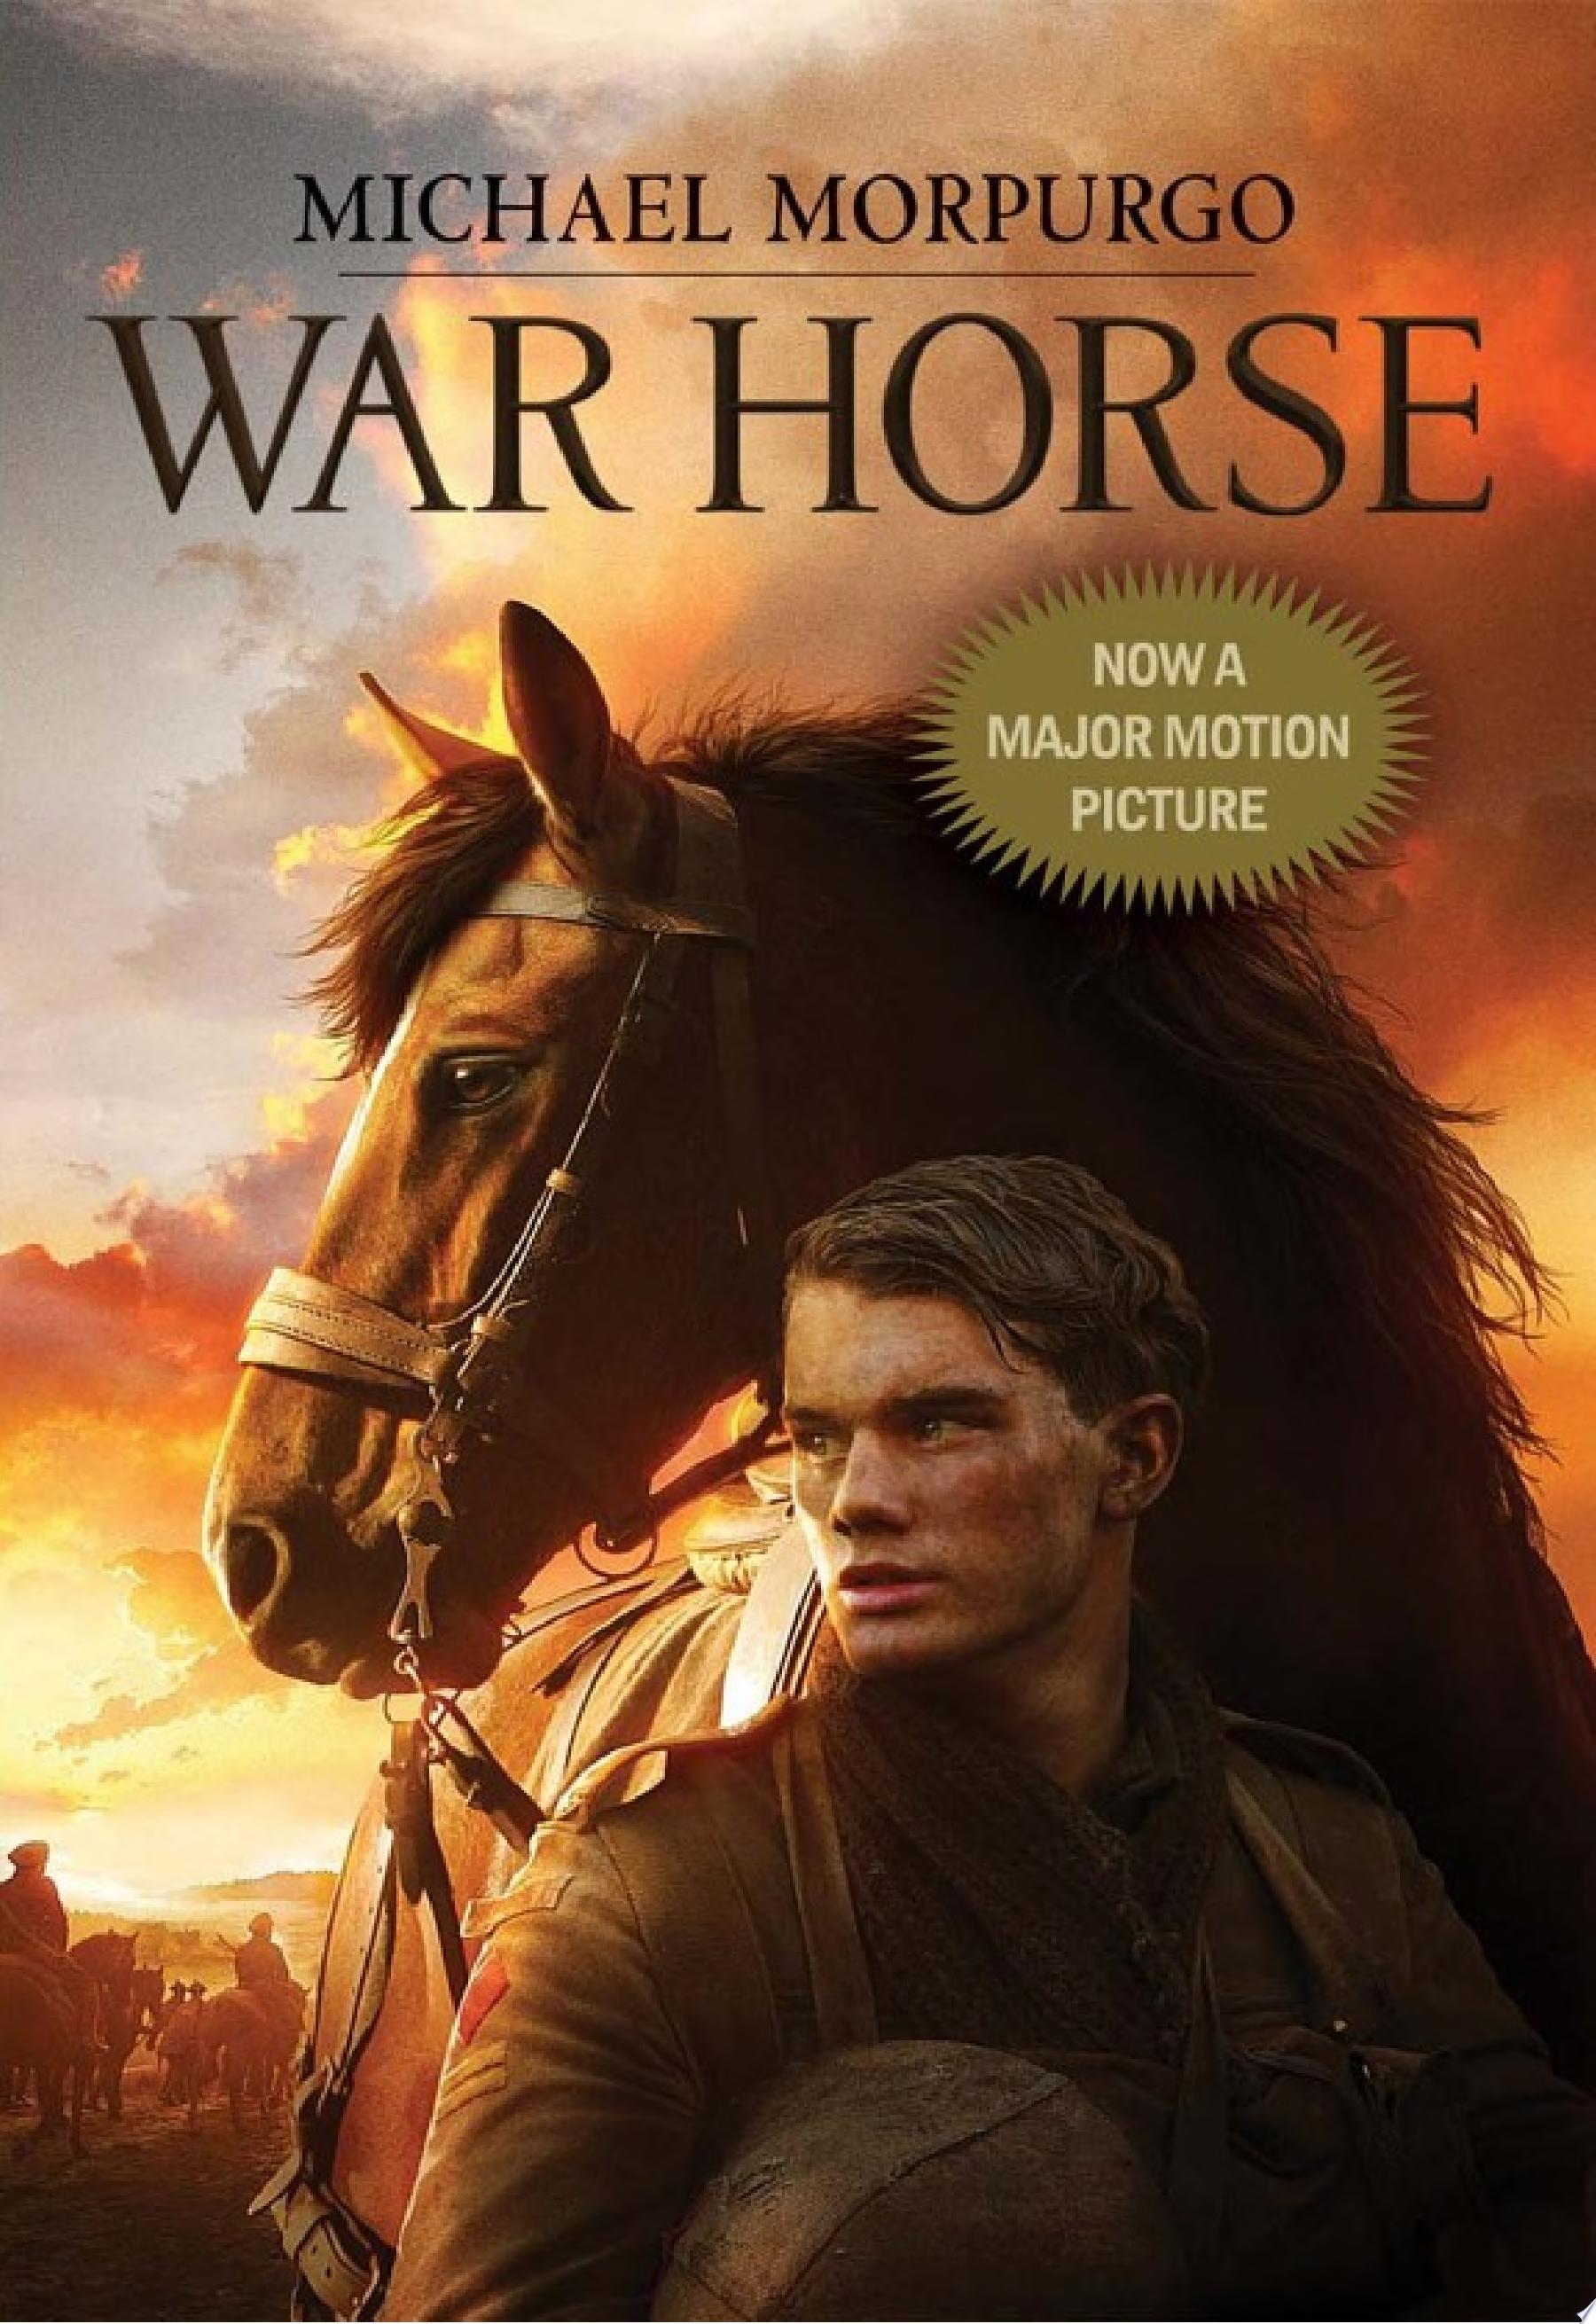 Image for "War Horse"